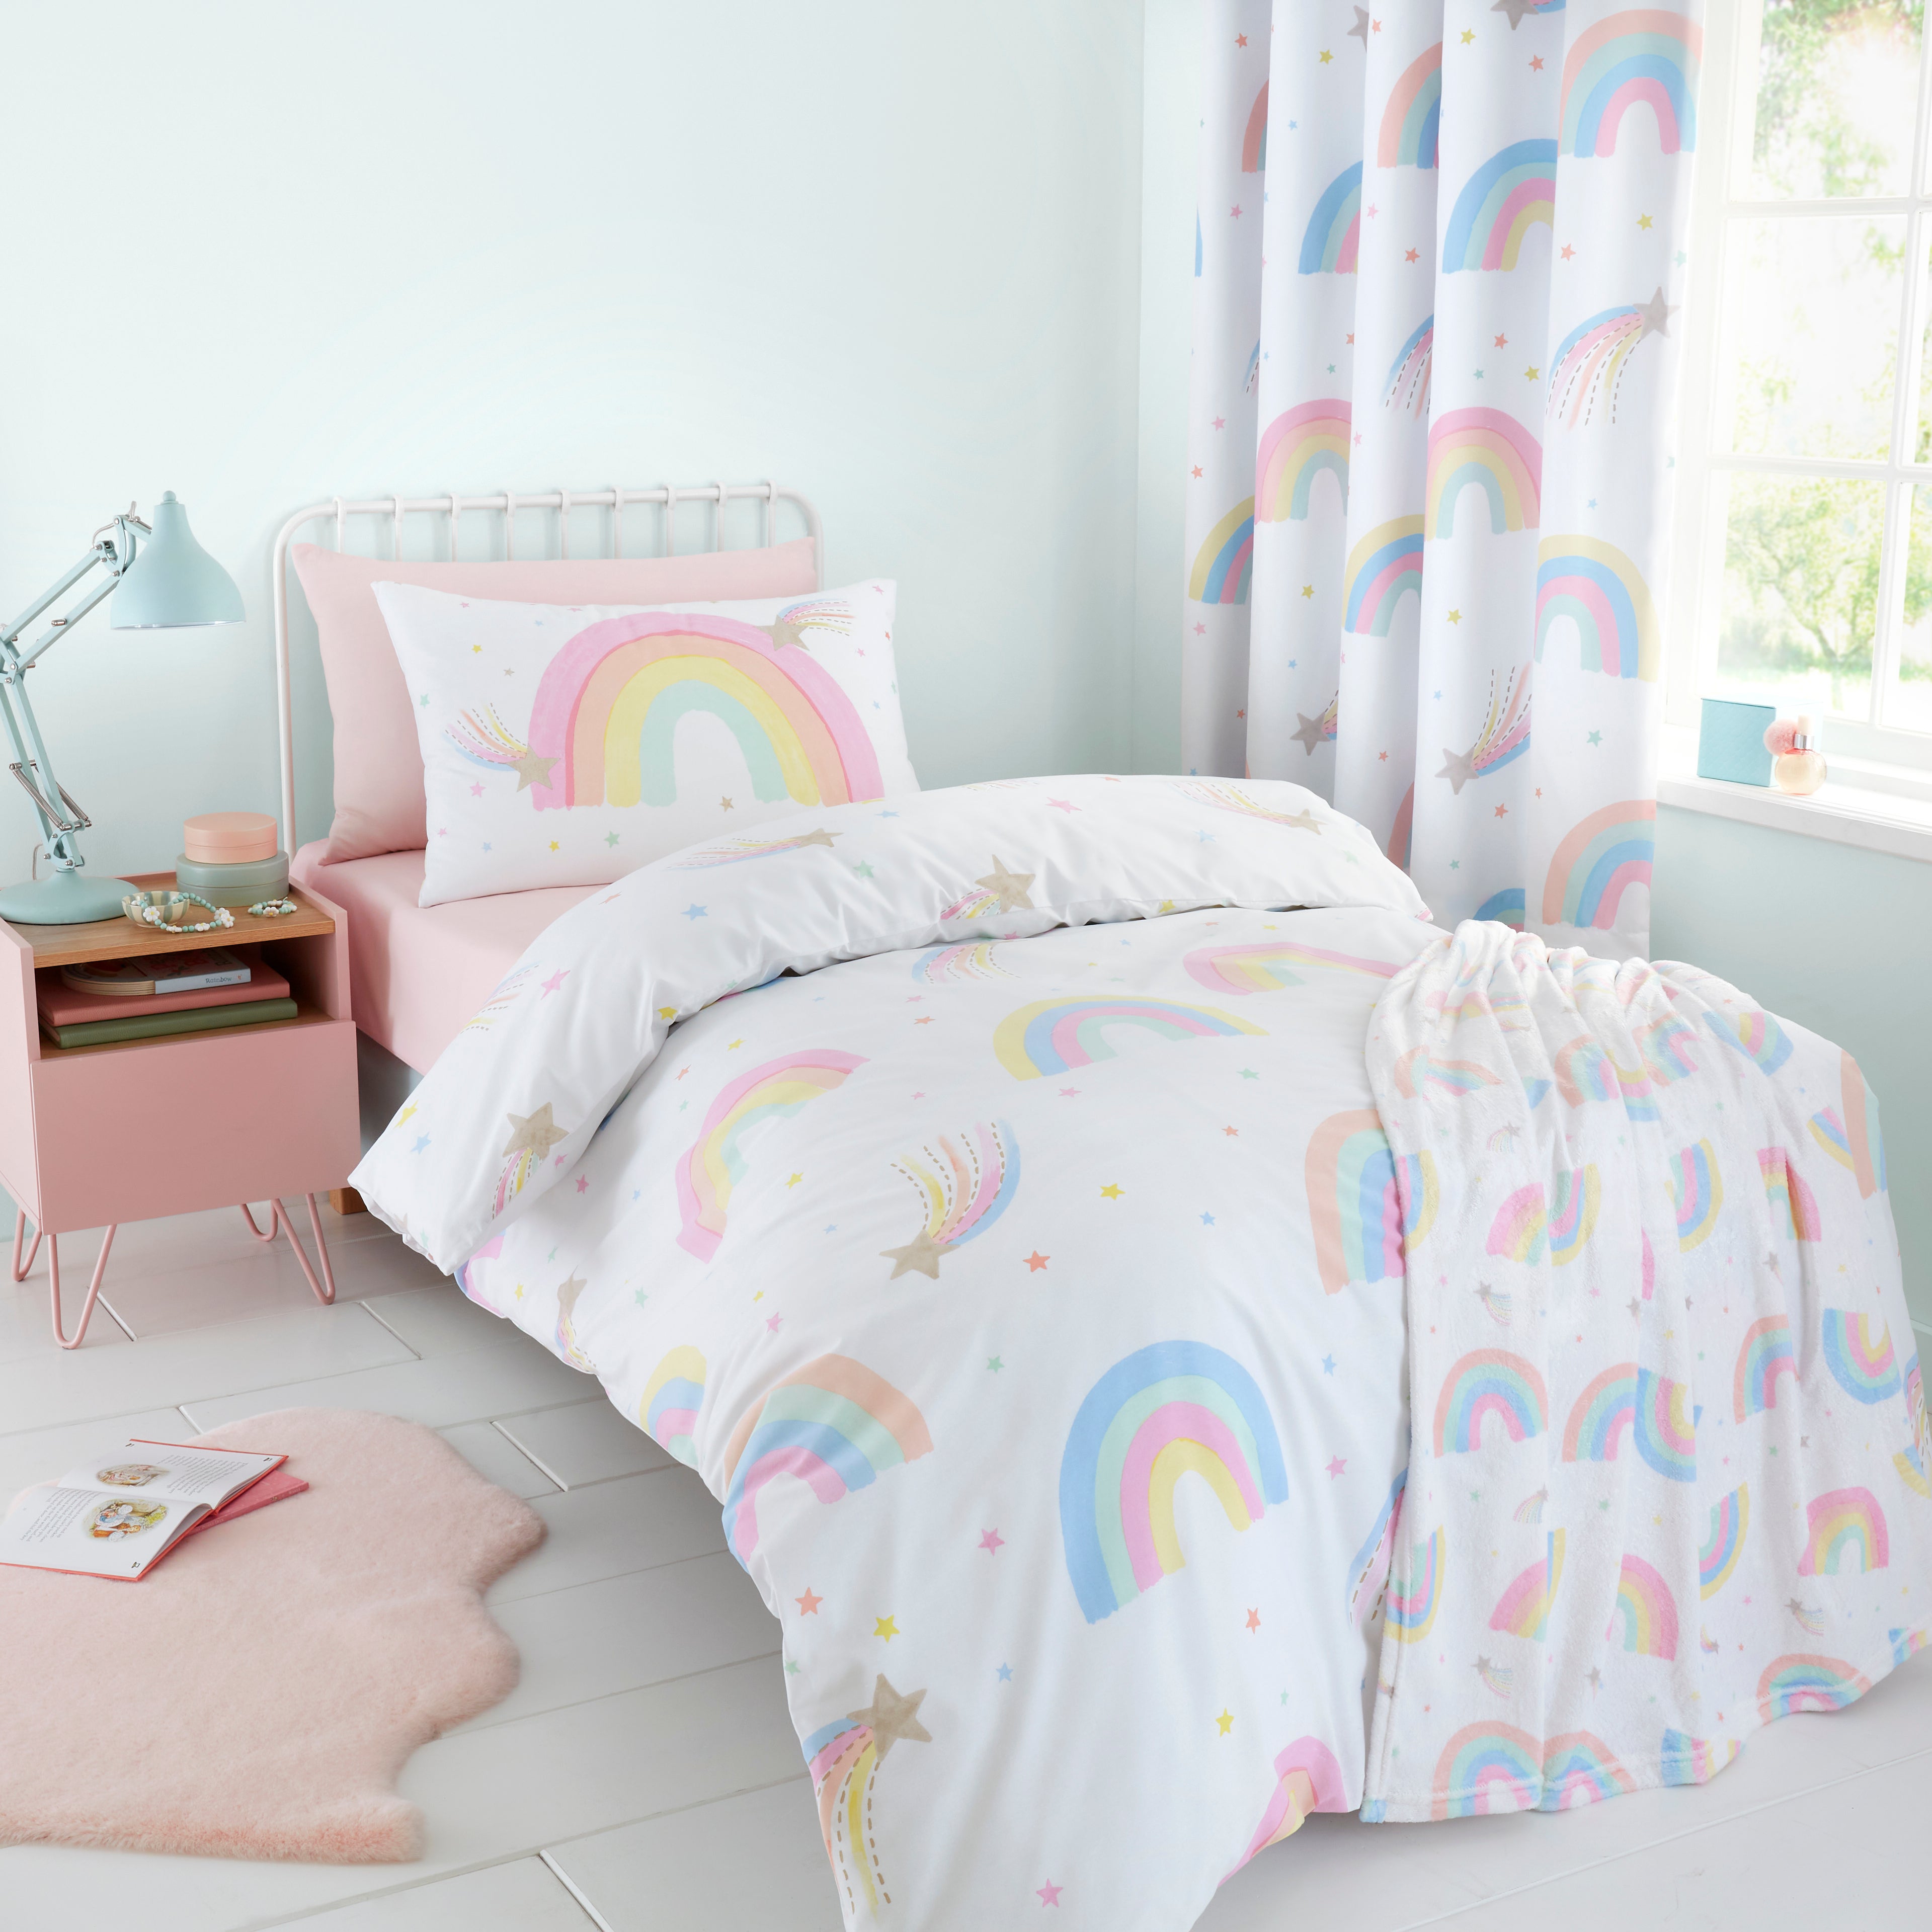 Watercolour Rainbow Duvet Cover And Pillowcase Set Whitepinkblue